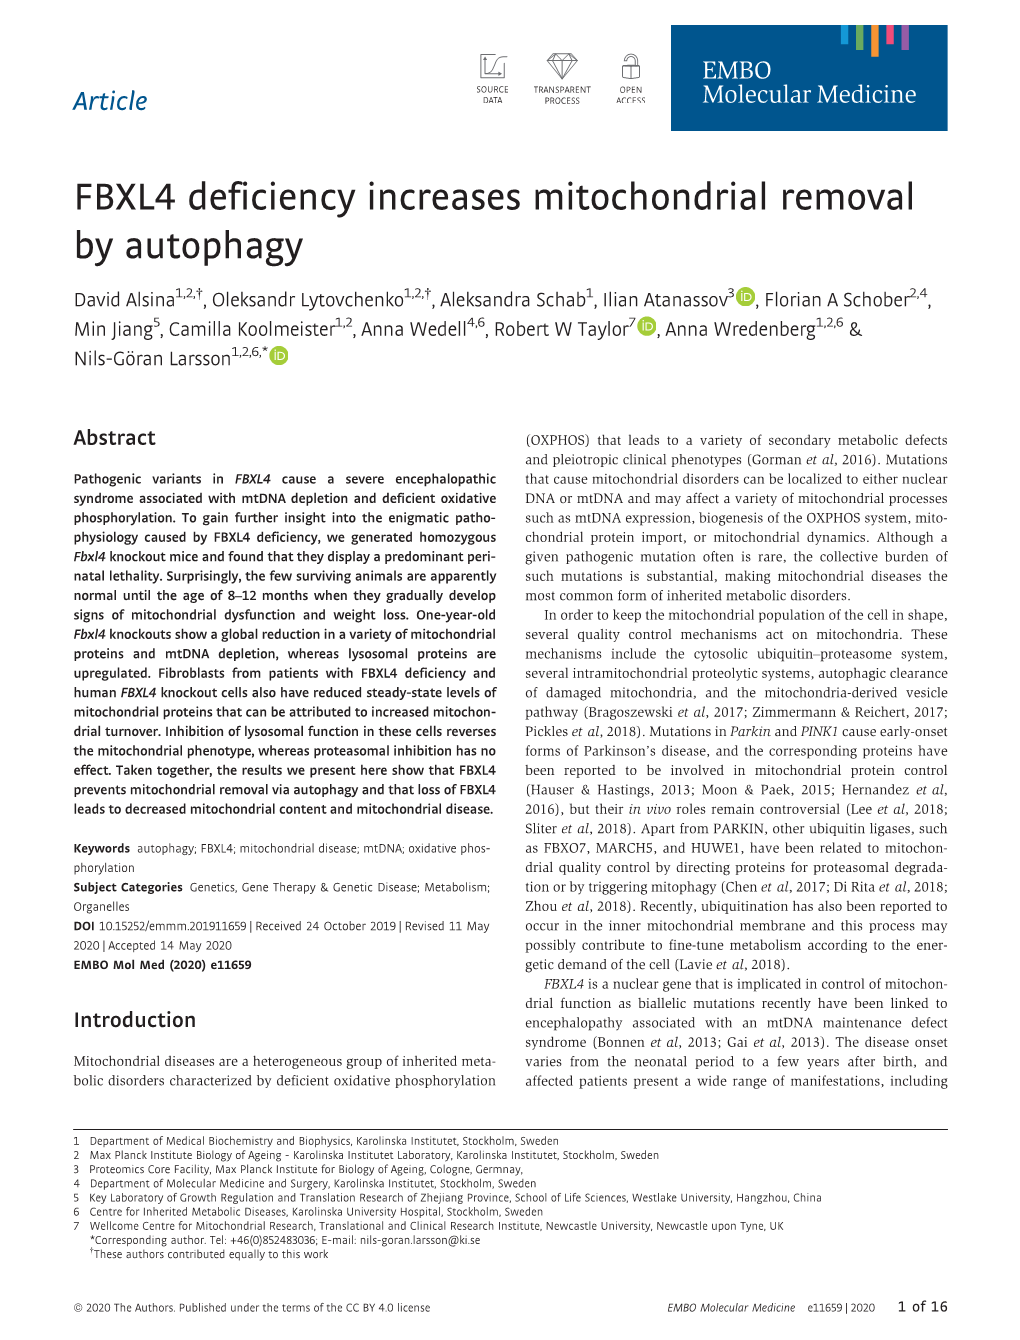 FBXL4 Deficiency Increases Mitochondrial Removal by Autophagy